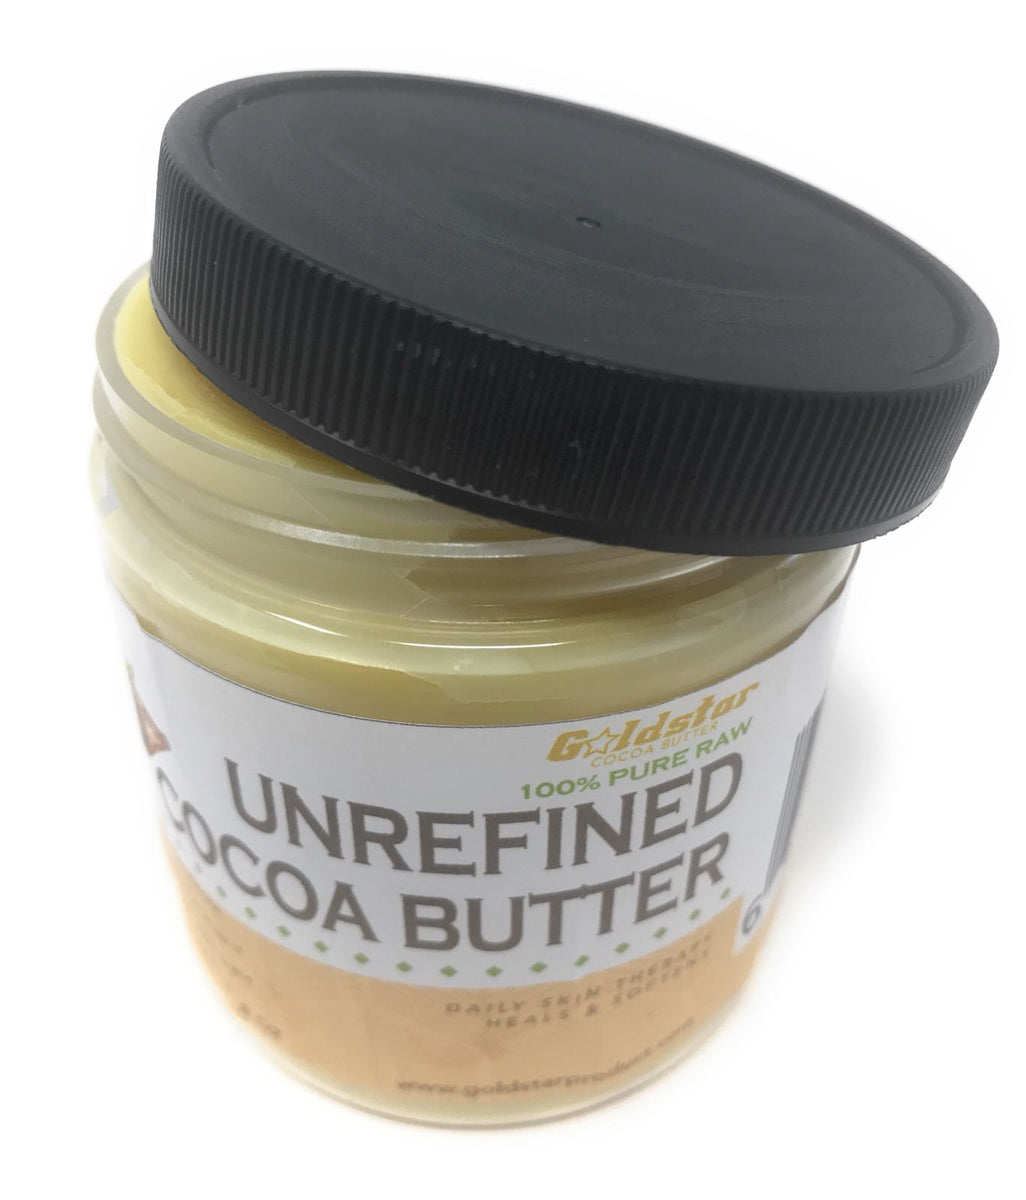  Better Shea Butter Organic Cocoa Butter Raw Unrefined